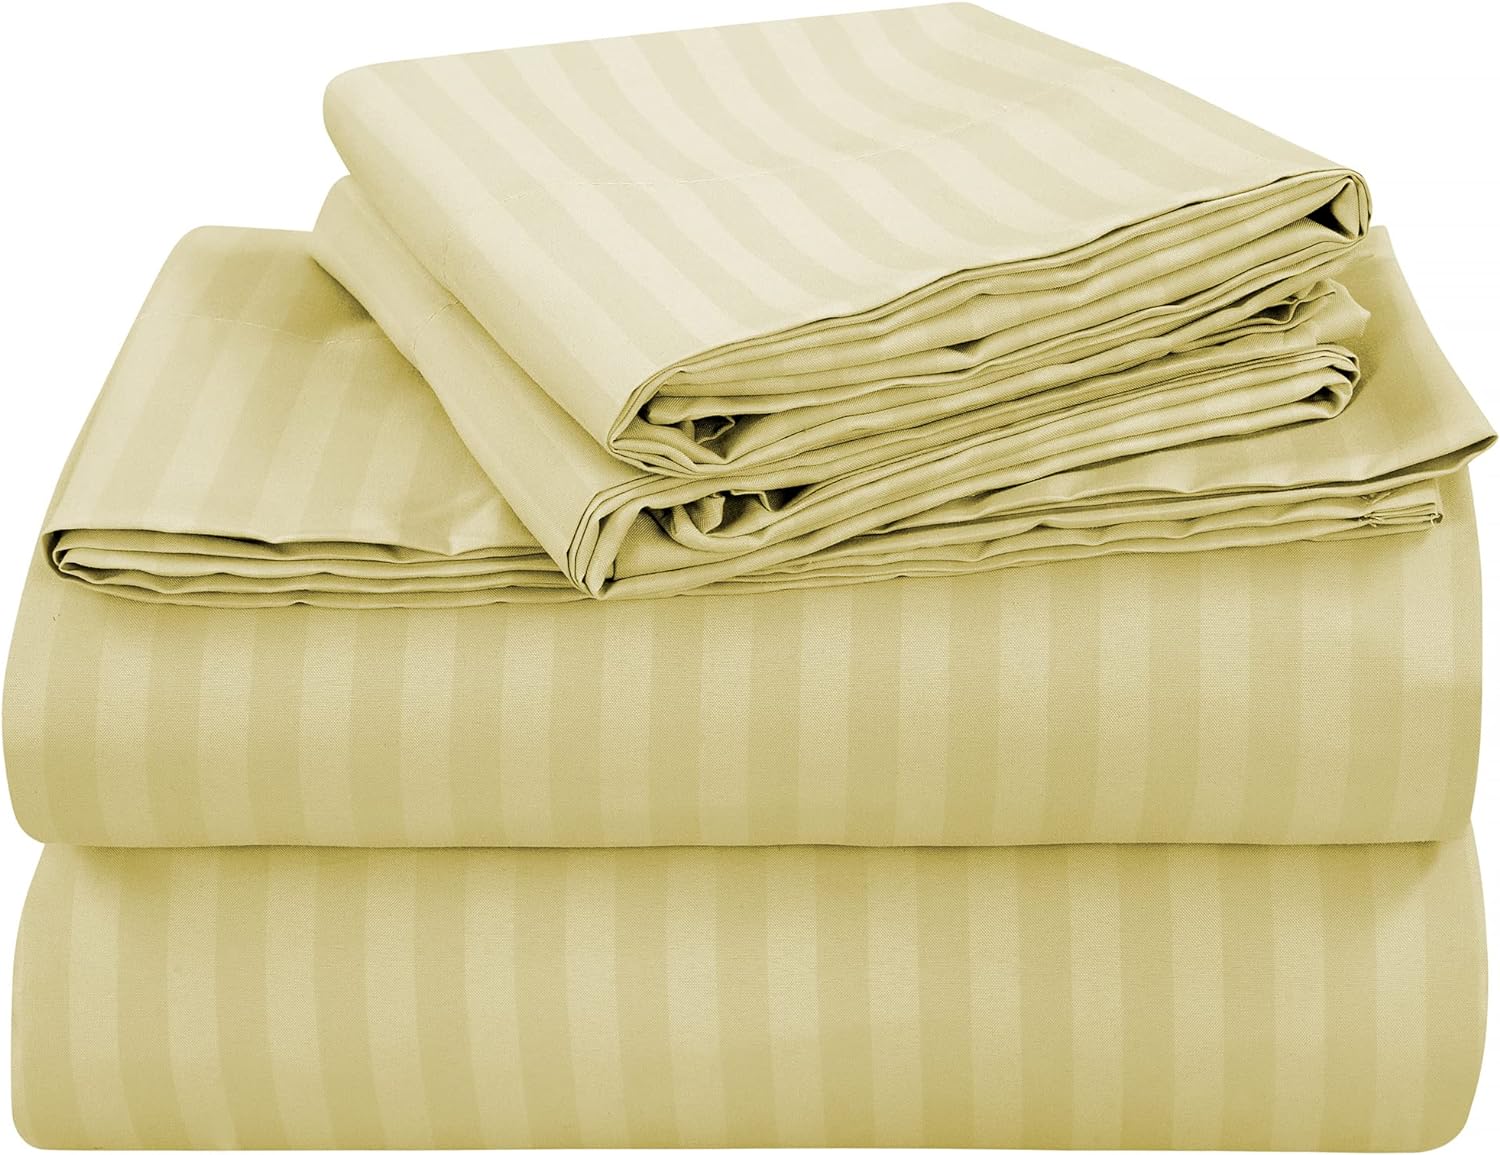 ROYALE LINENS Striped Bed Sheet Set - Brushed Microfiber 1800 Bedding - 1 Fitted Sheet, 1 Flat Sheet, 1 Pillow case - Wrinkle & Fade Resistant - 3 Piece Damask Stripe Twin Bed Sheet Set (Twin, Beige)